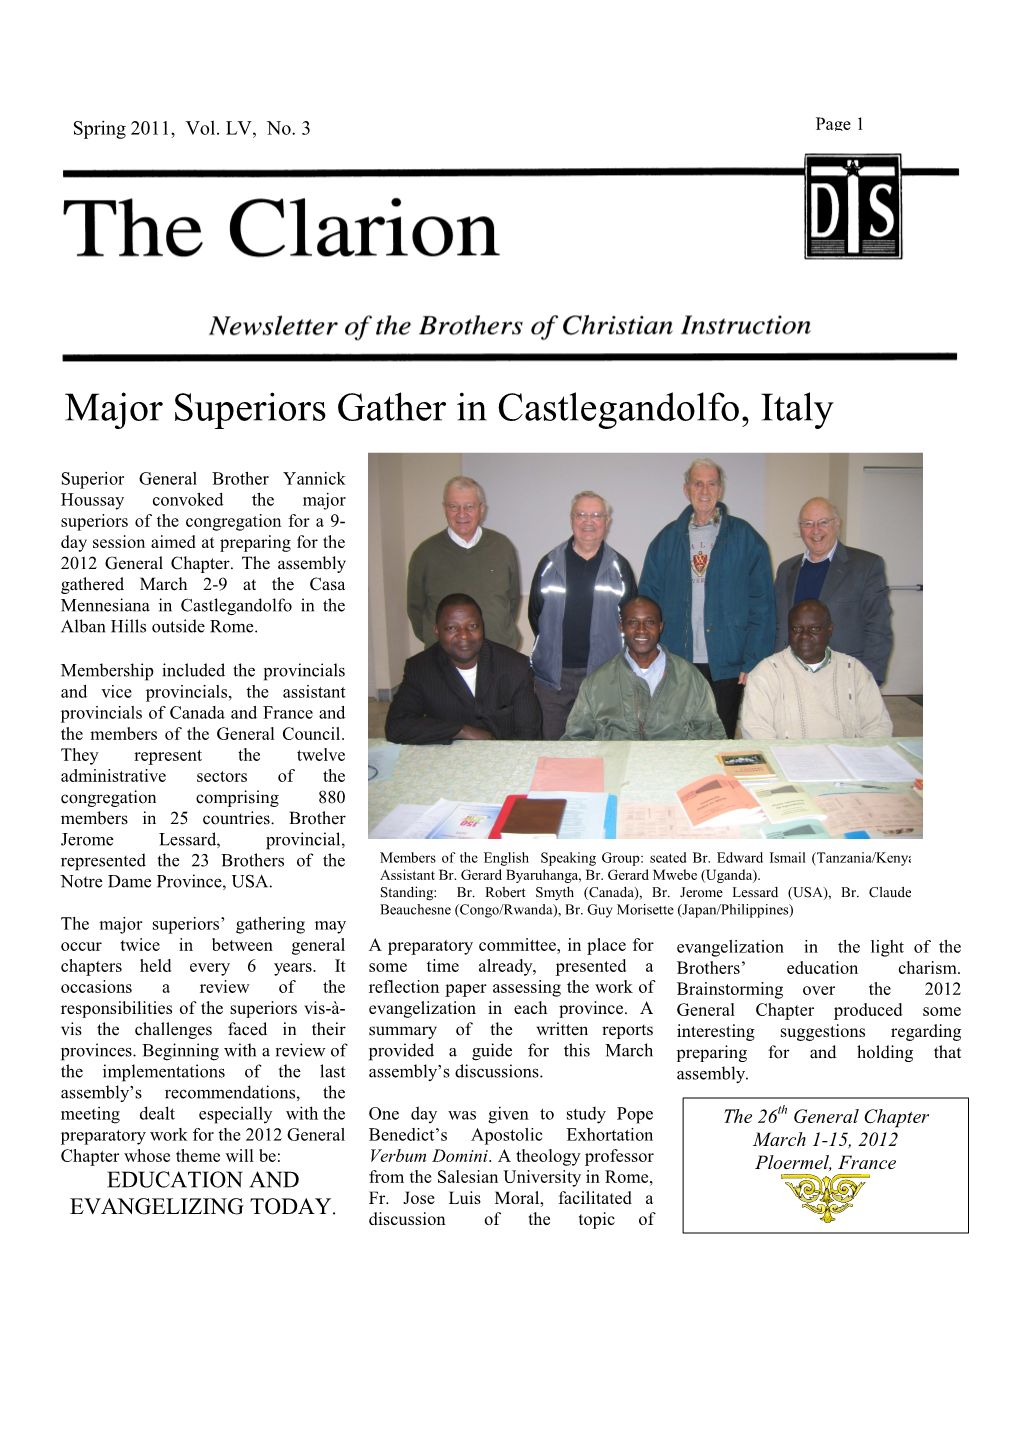 Major Superiors Gather in Castlegandolfo, Italy